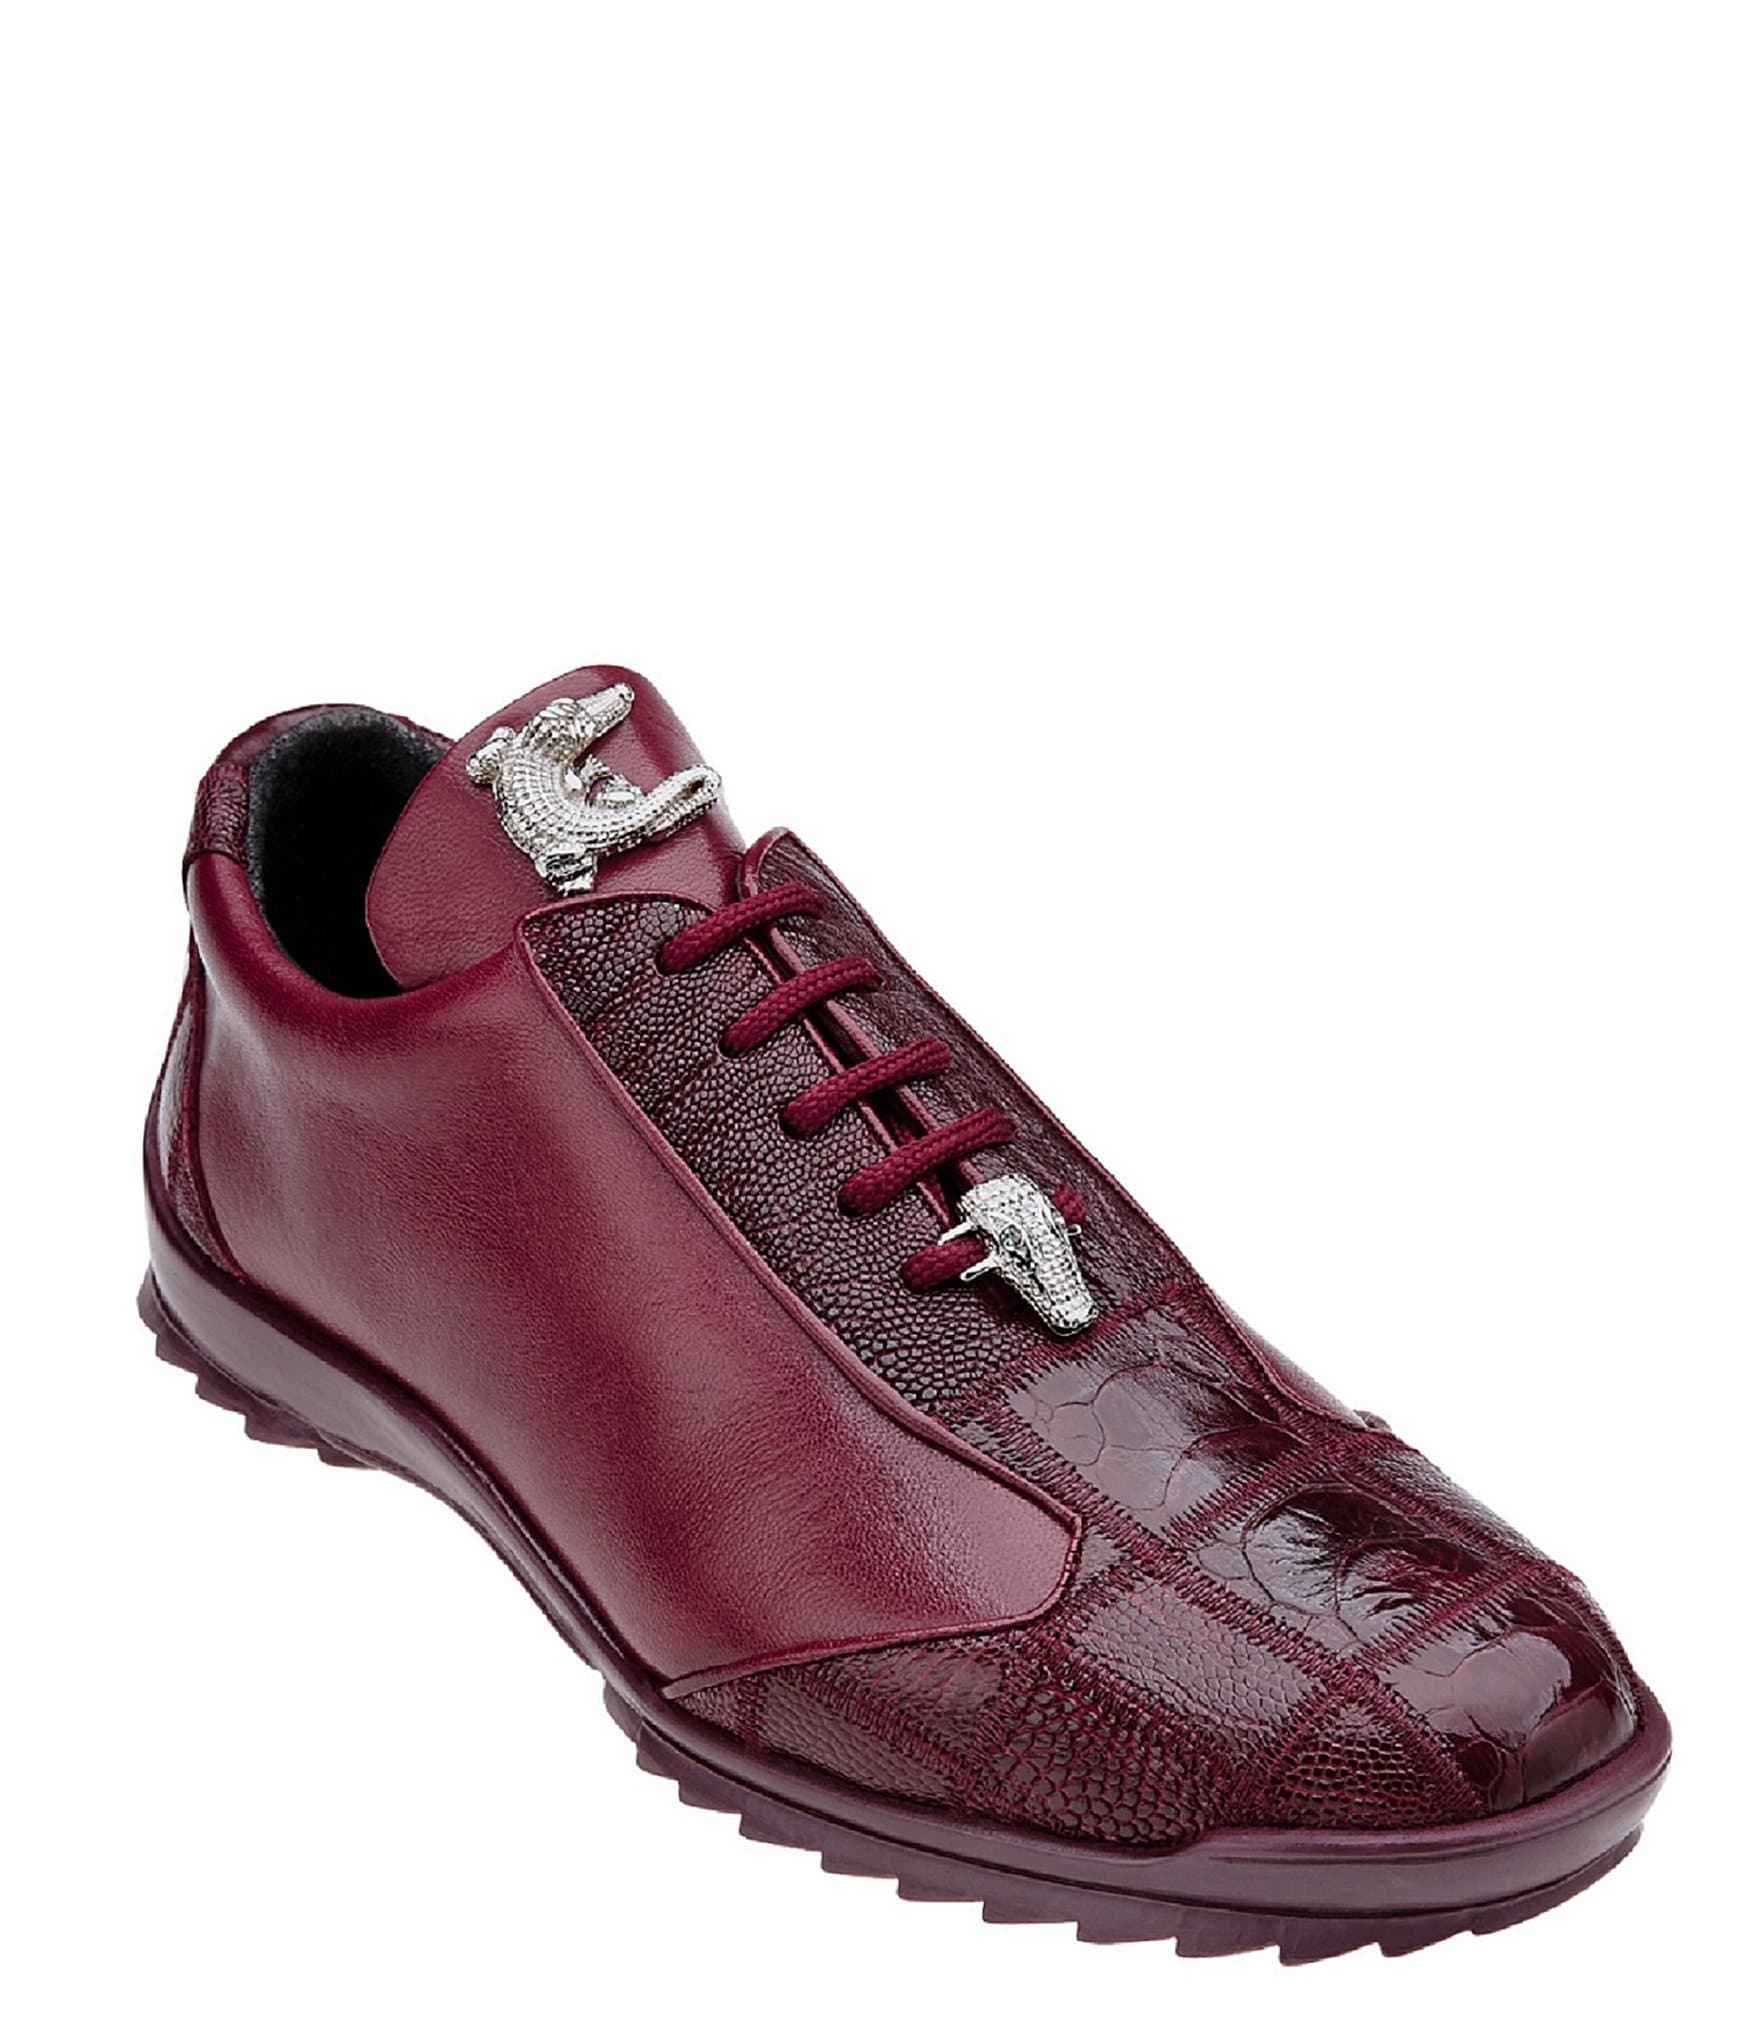 burgundy: Men's Shoes | Dillard's